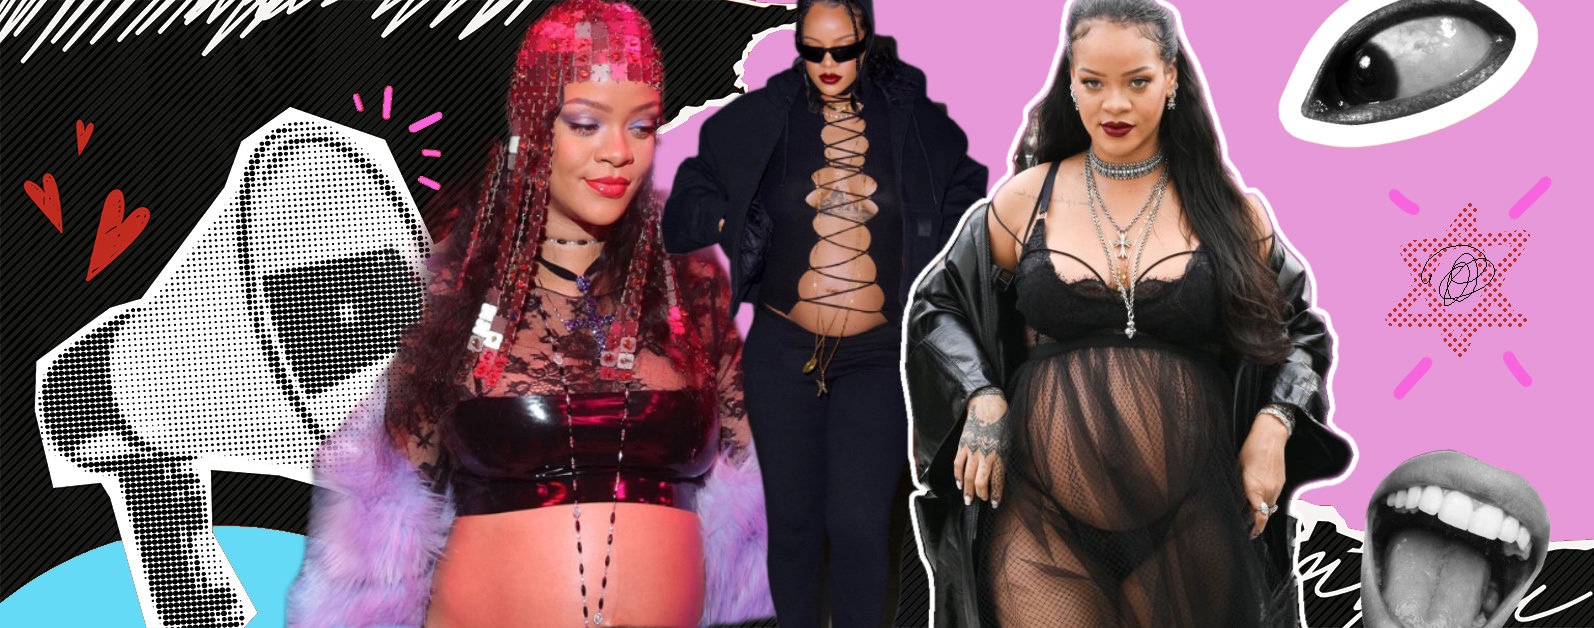 Rihanna: Γιατί να γίνονται όλα στο βωμό του «σέξι»;